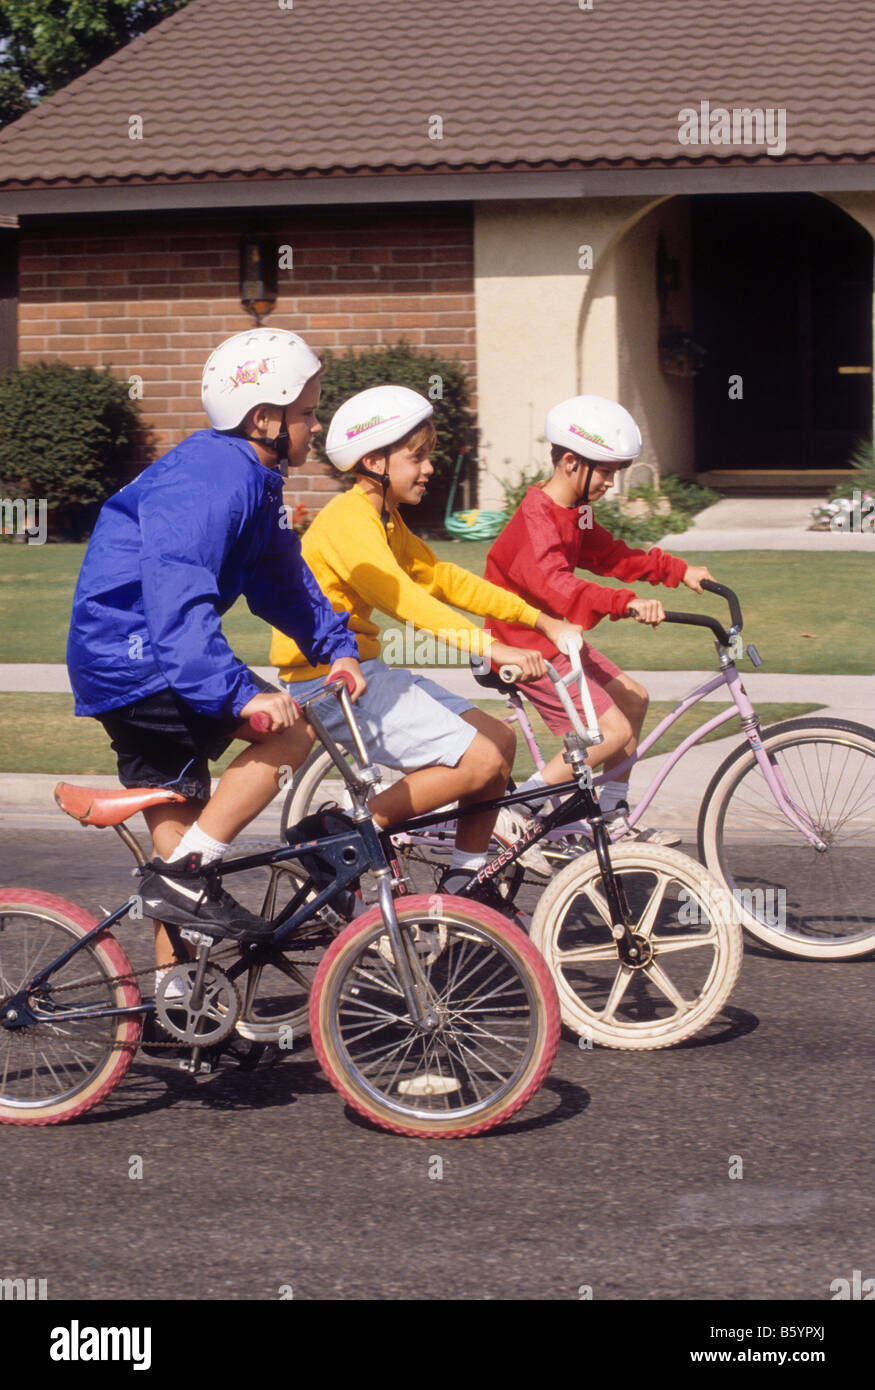 Three boys wearing safety helmets ride bikes in street Stock Photo